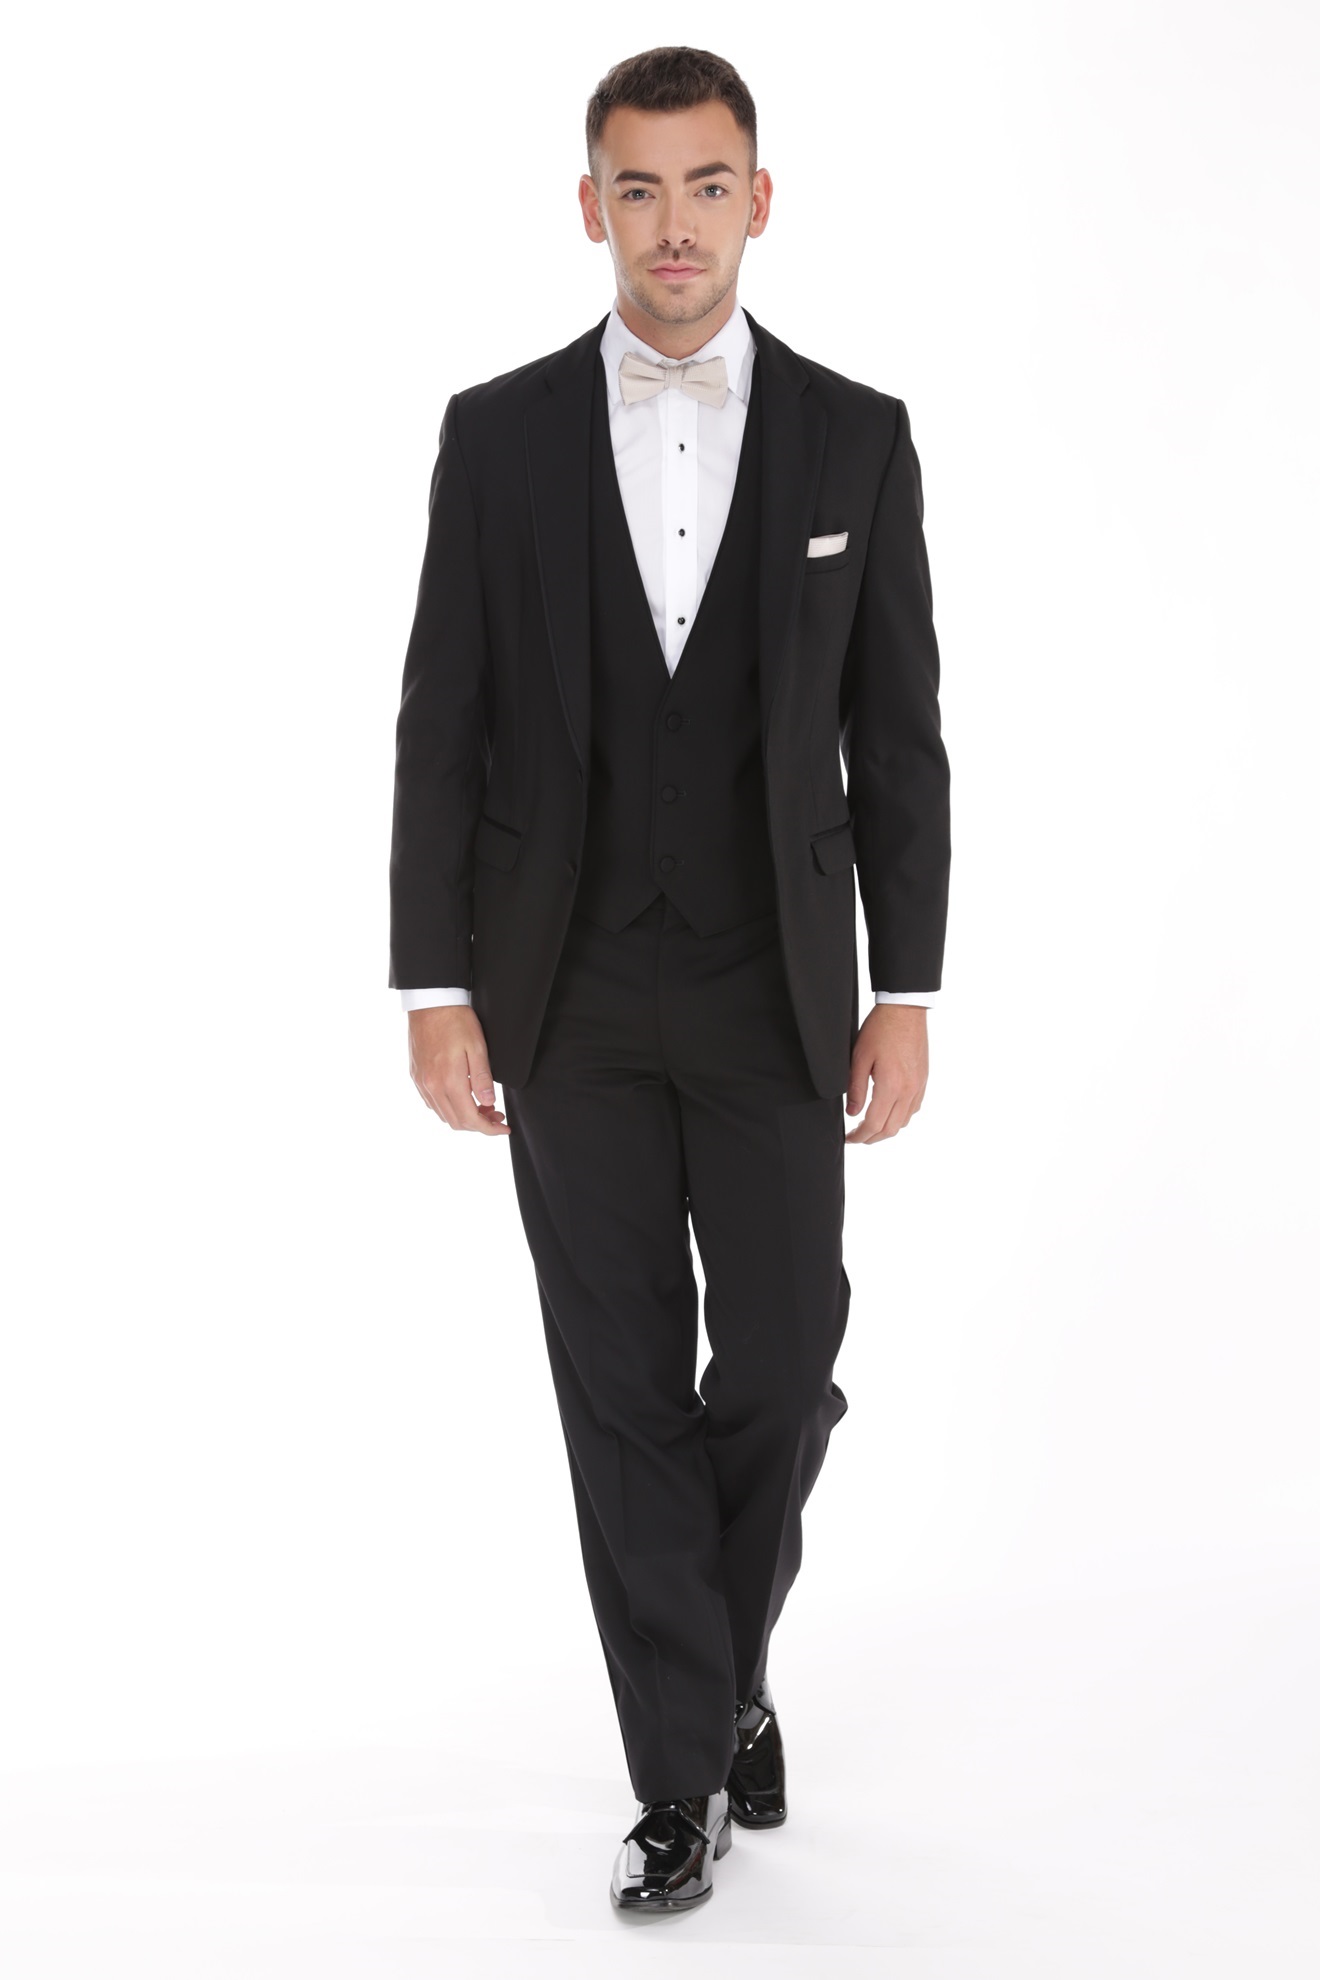 Allure Men Bartlett |Bernard's Formalwear | Durham NC | Tuxedo Warehouse